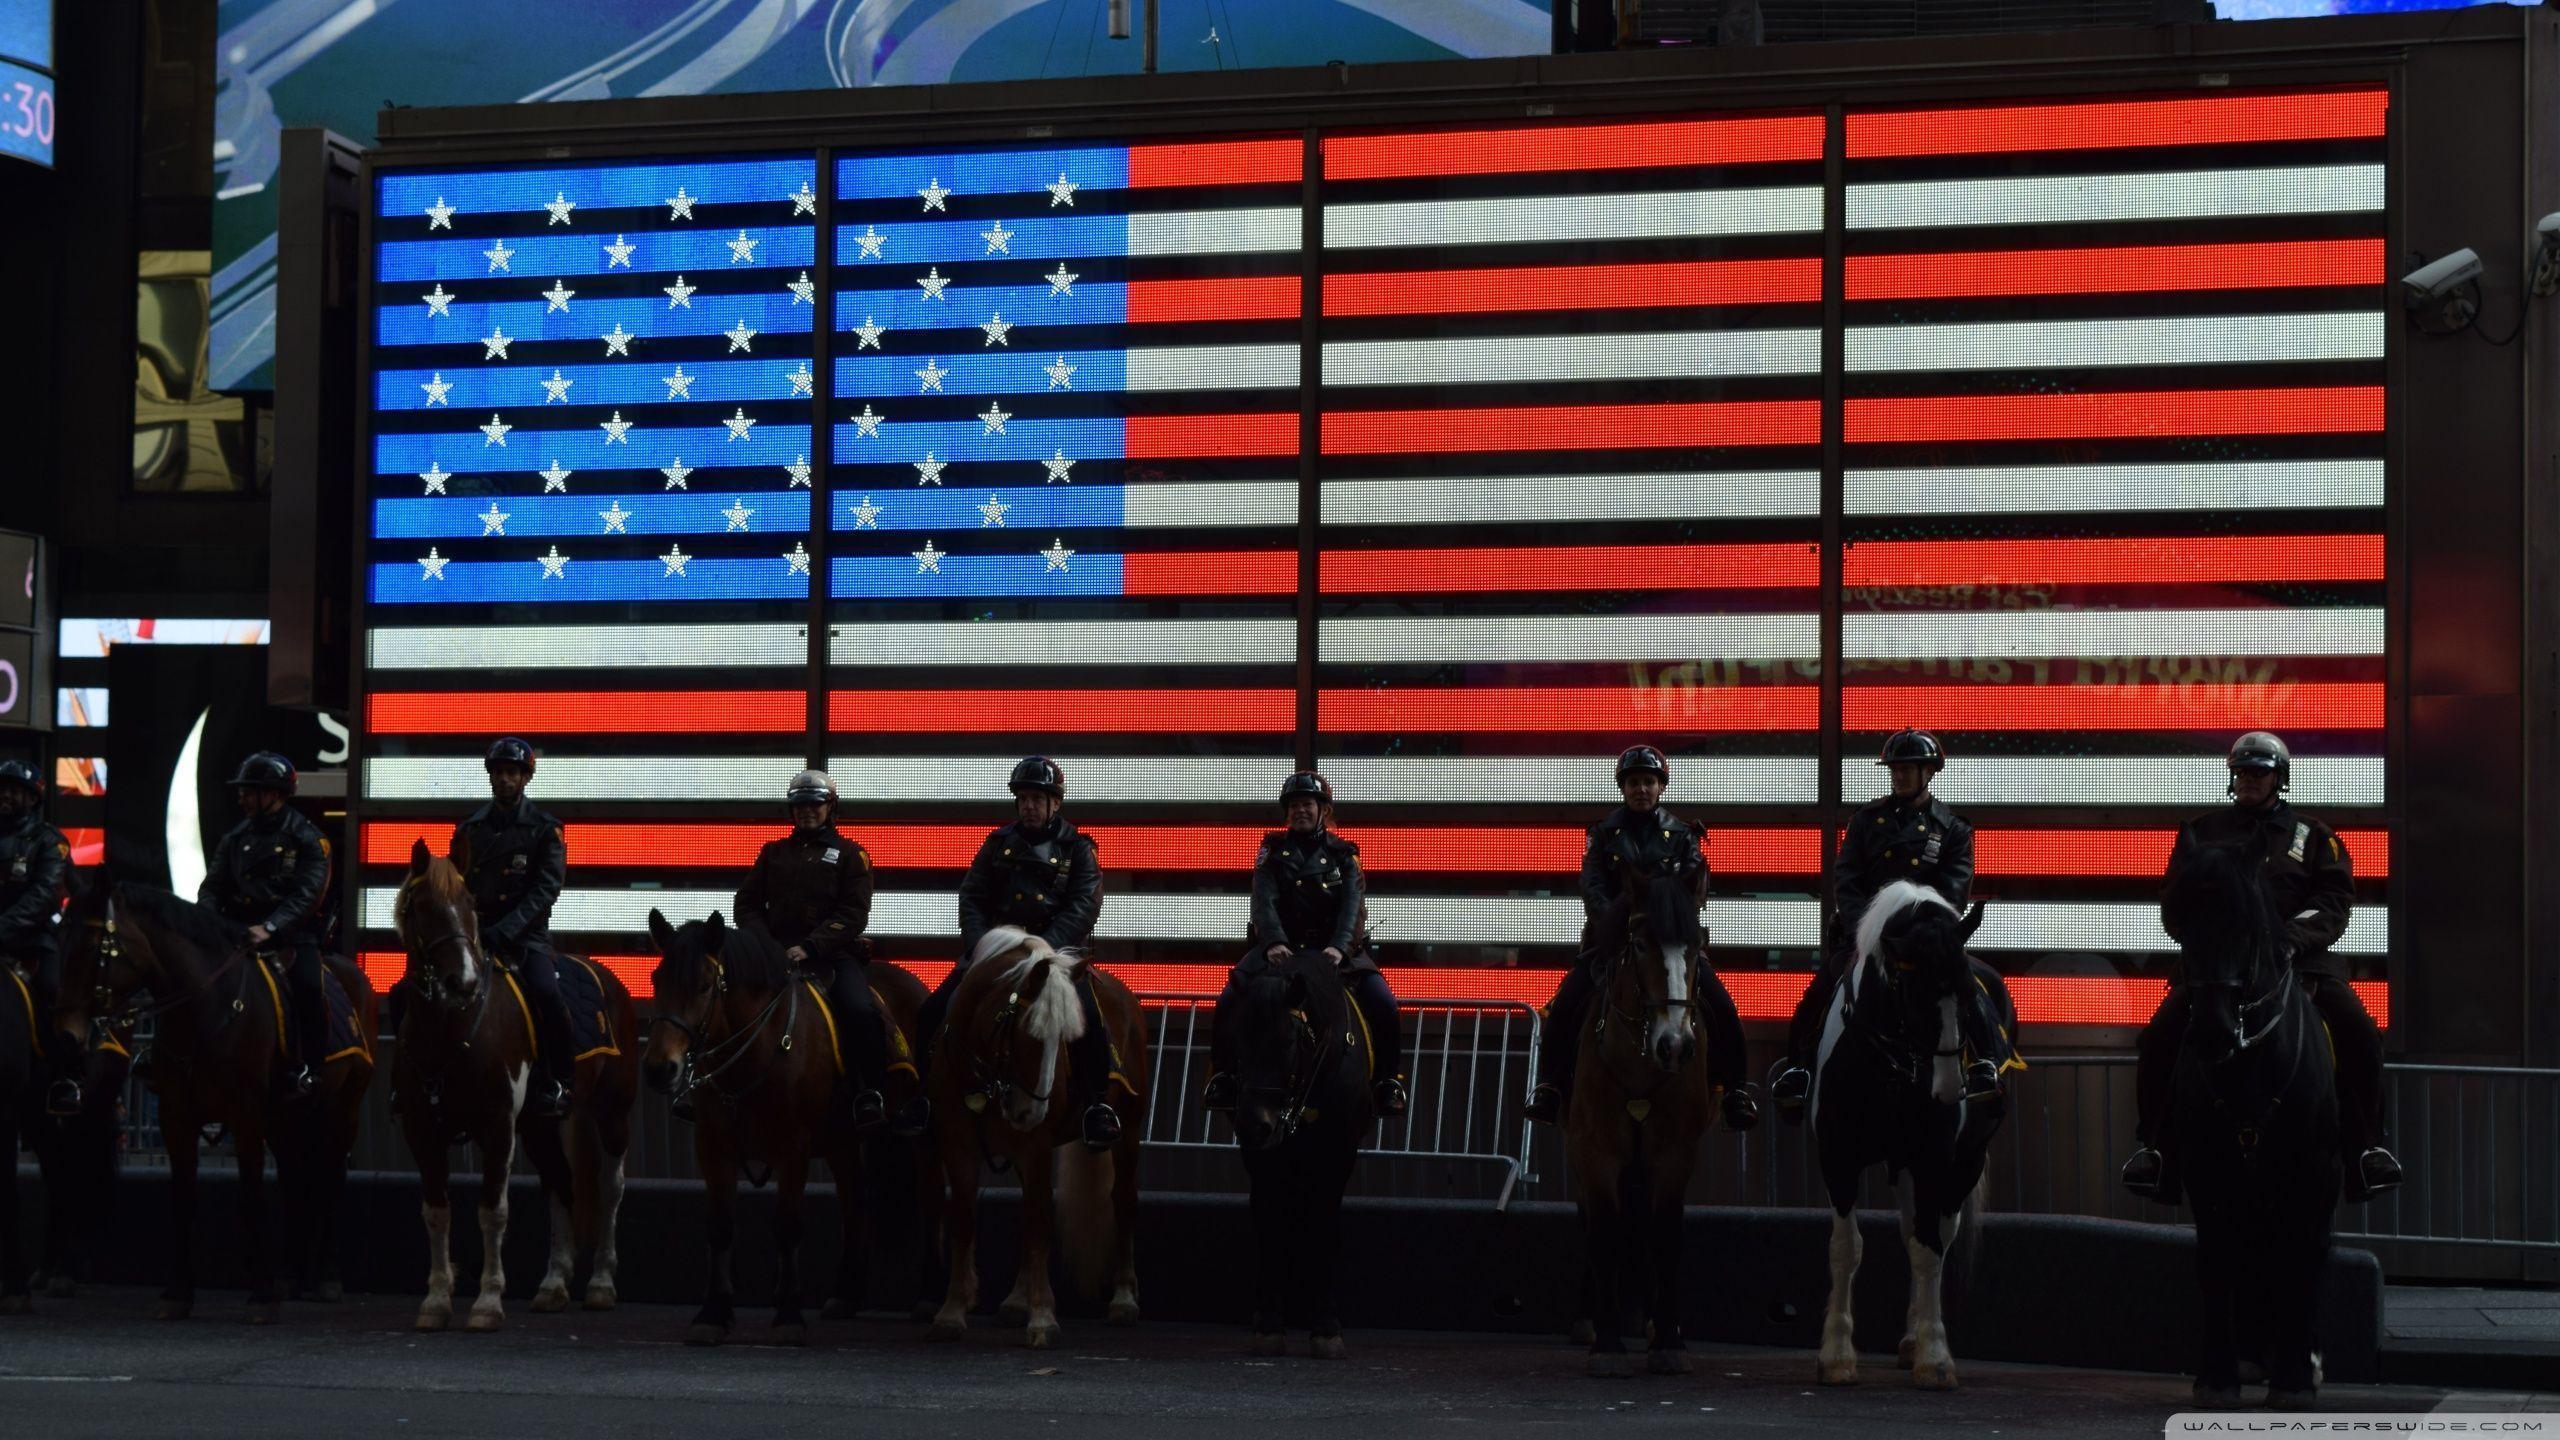 NYPD Horse Patrol HD desktop wallpapers : Widescreen : High Definition